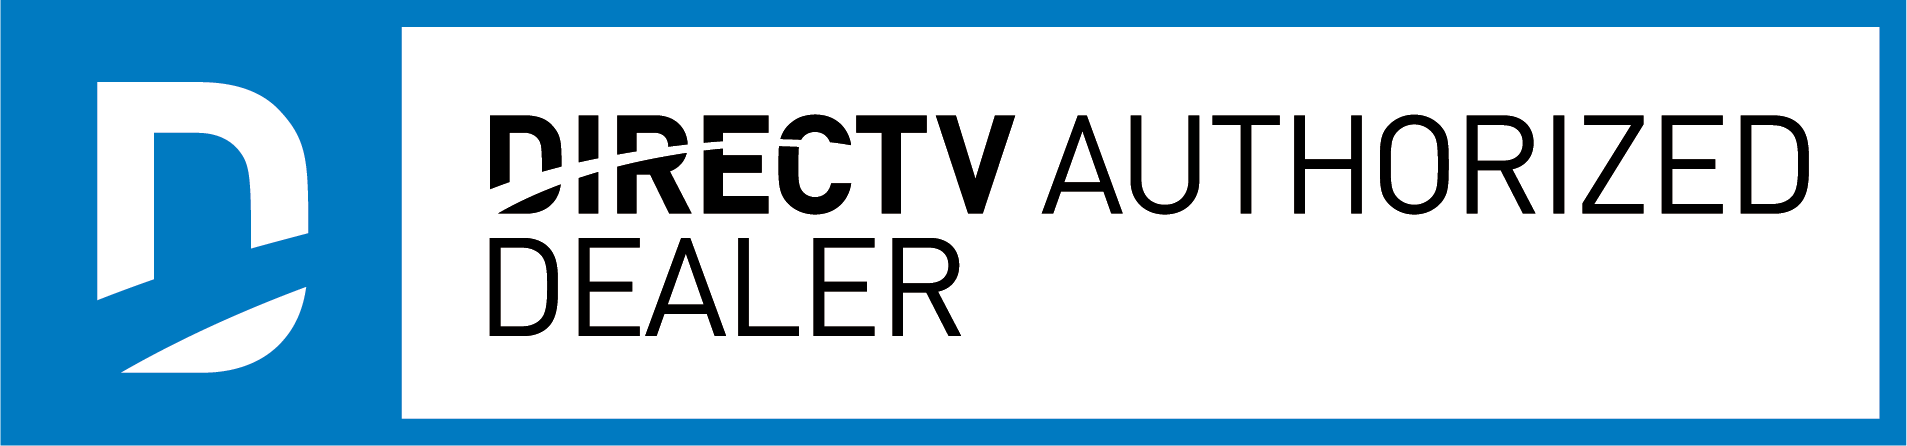 Directv Authorized Dealer logo